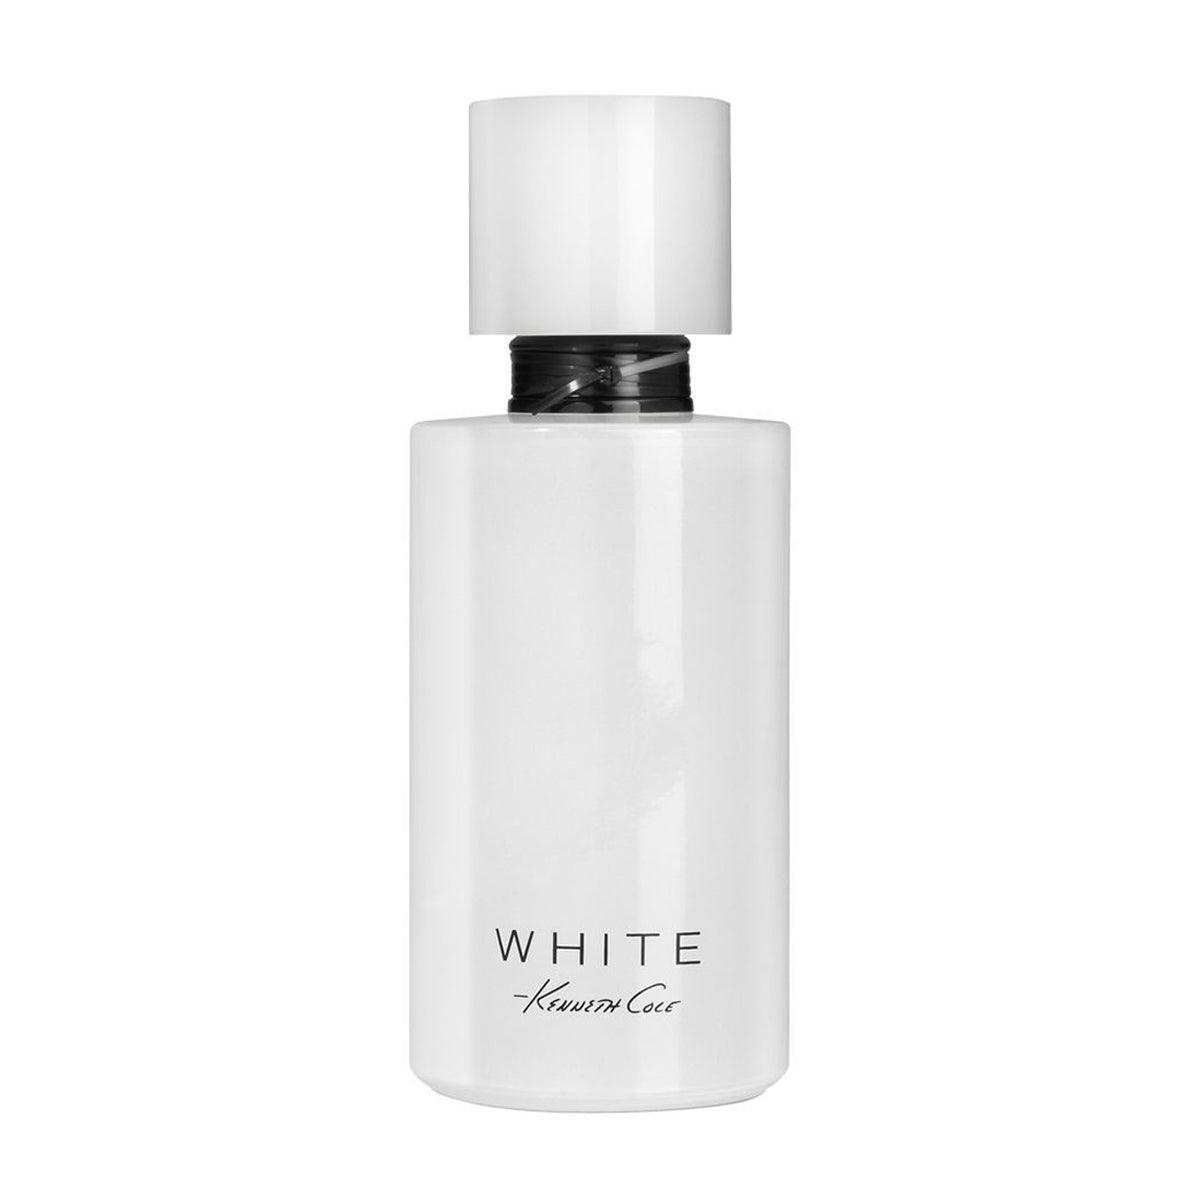 Kenneth Cole White For Her Edp Spray 100ml-Perfume - Allurebeautypk